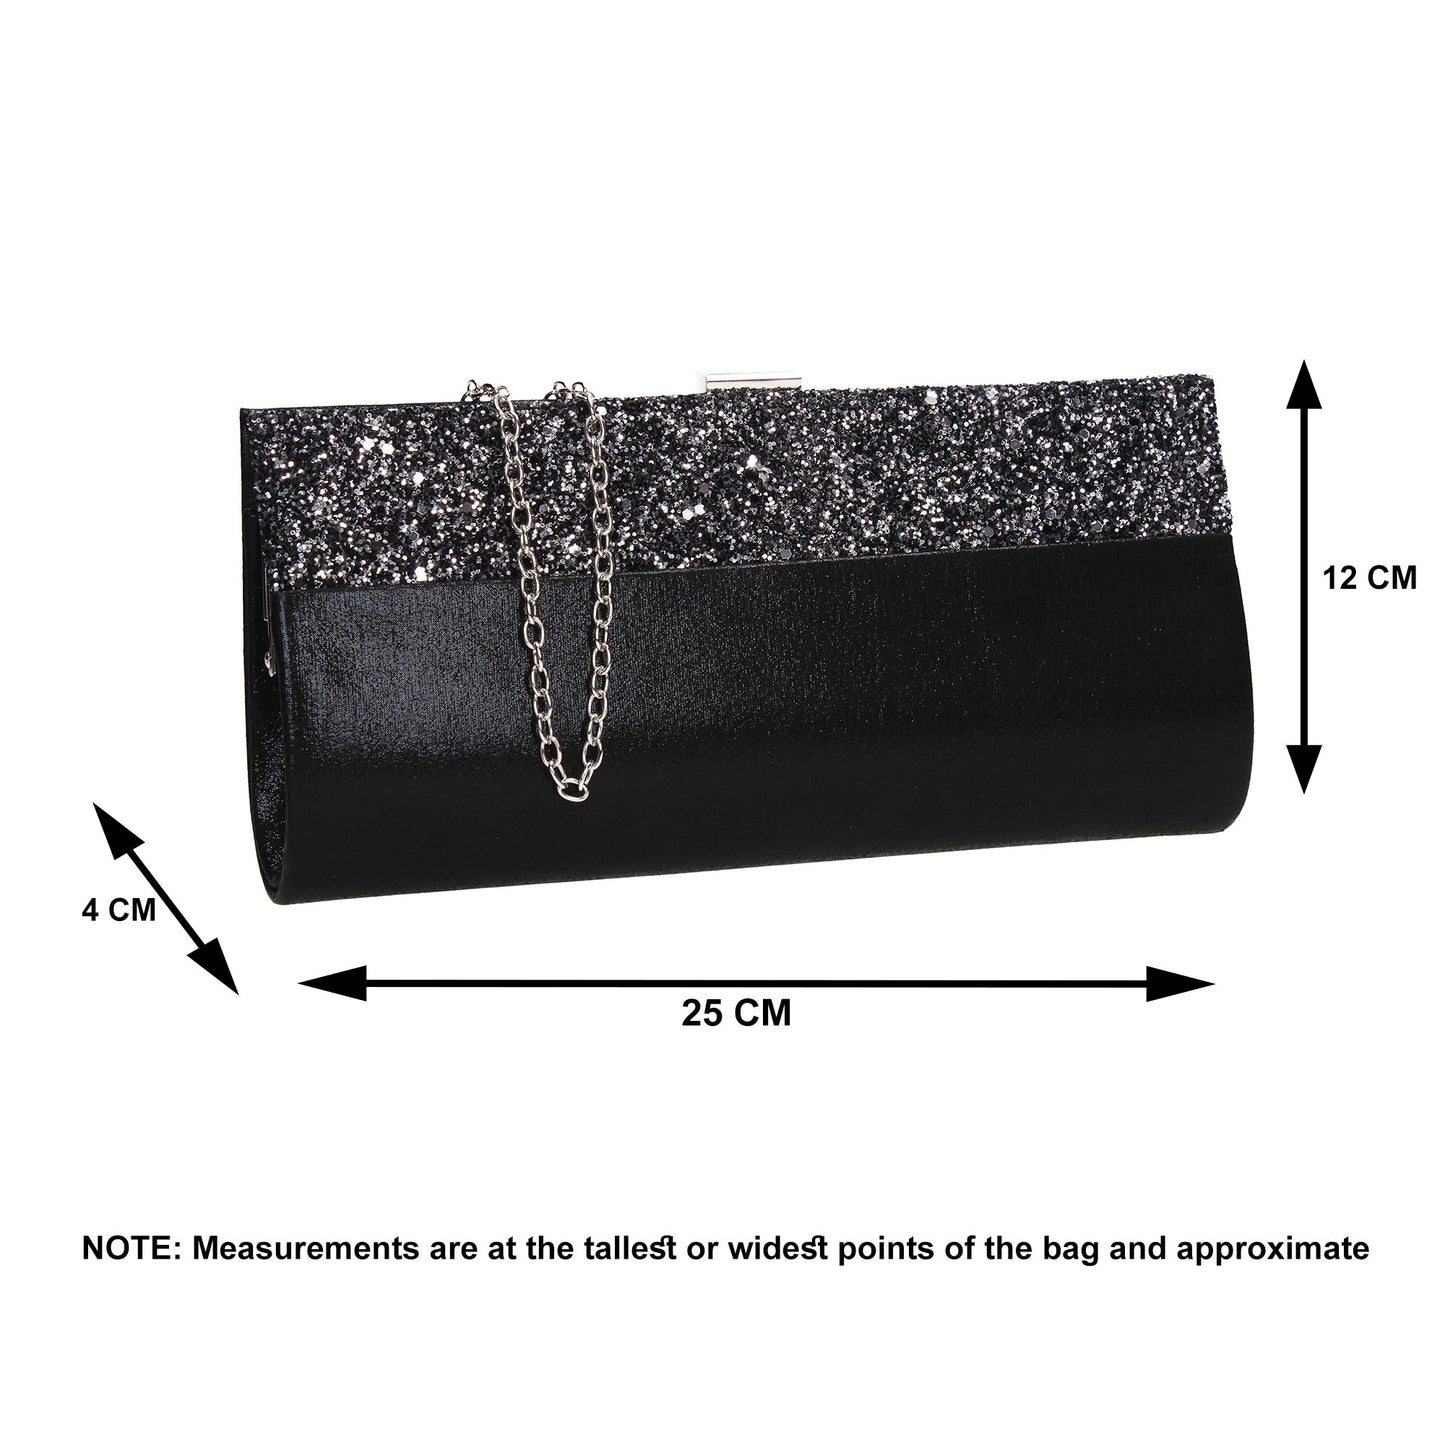 SWANKYSWANS Kathy Glitter Clutch Bag Black Cute Cheap Clutch Bag For Weddings School and Work